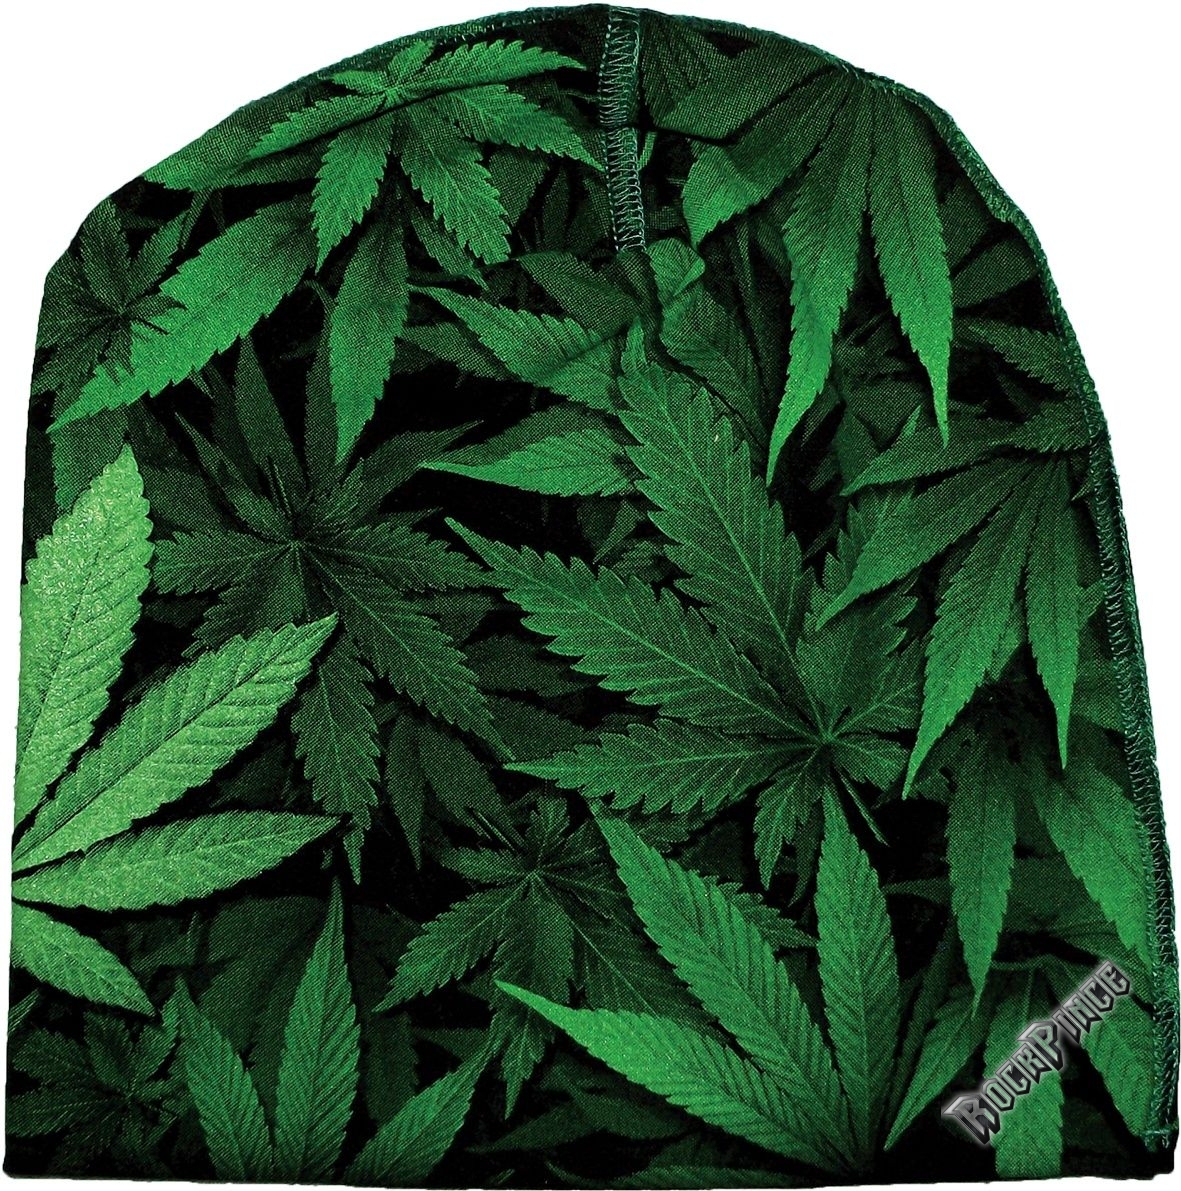 PAMUT SAPKA - Cannabis / Marihuana M-28